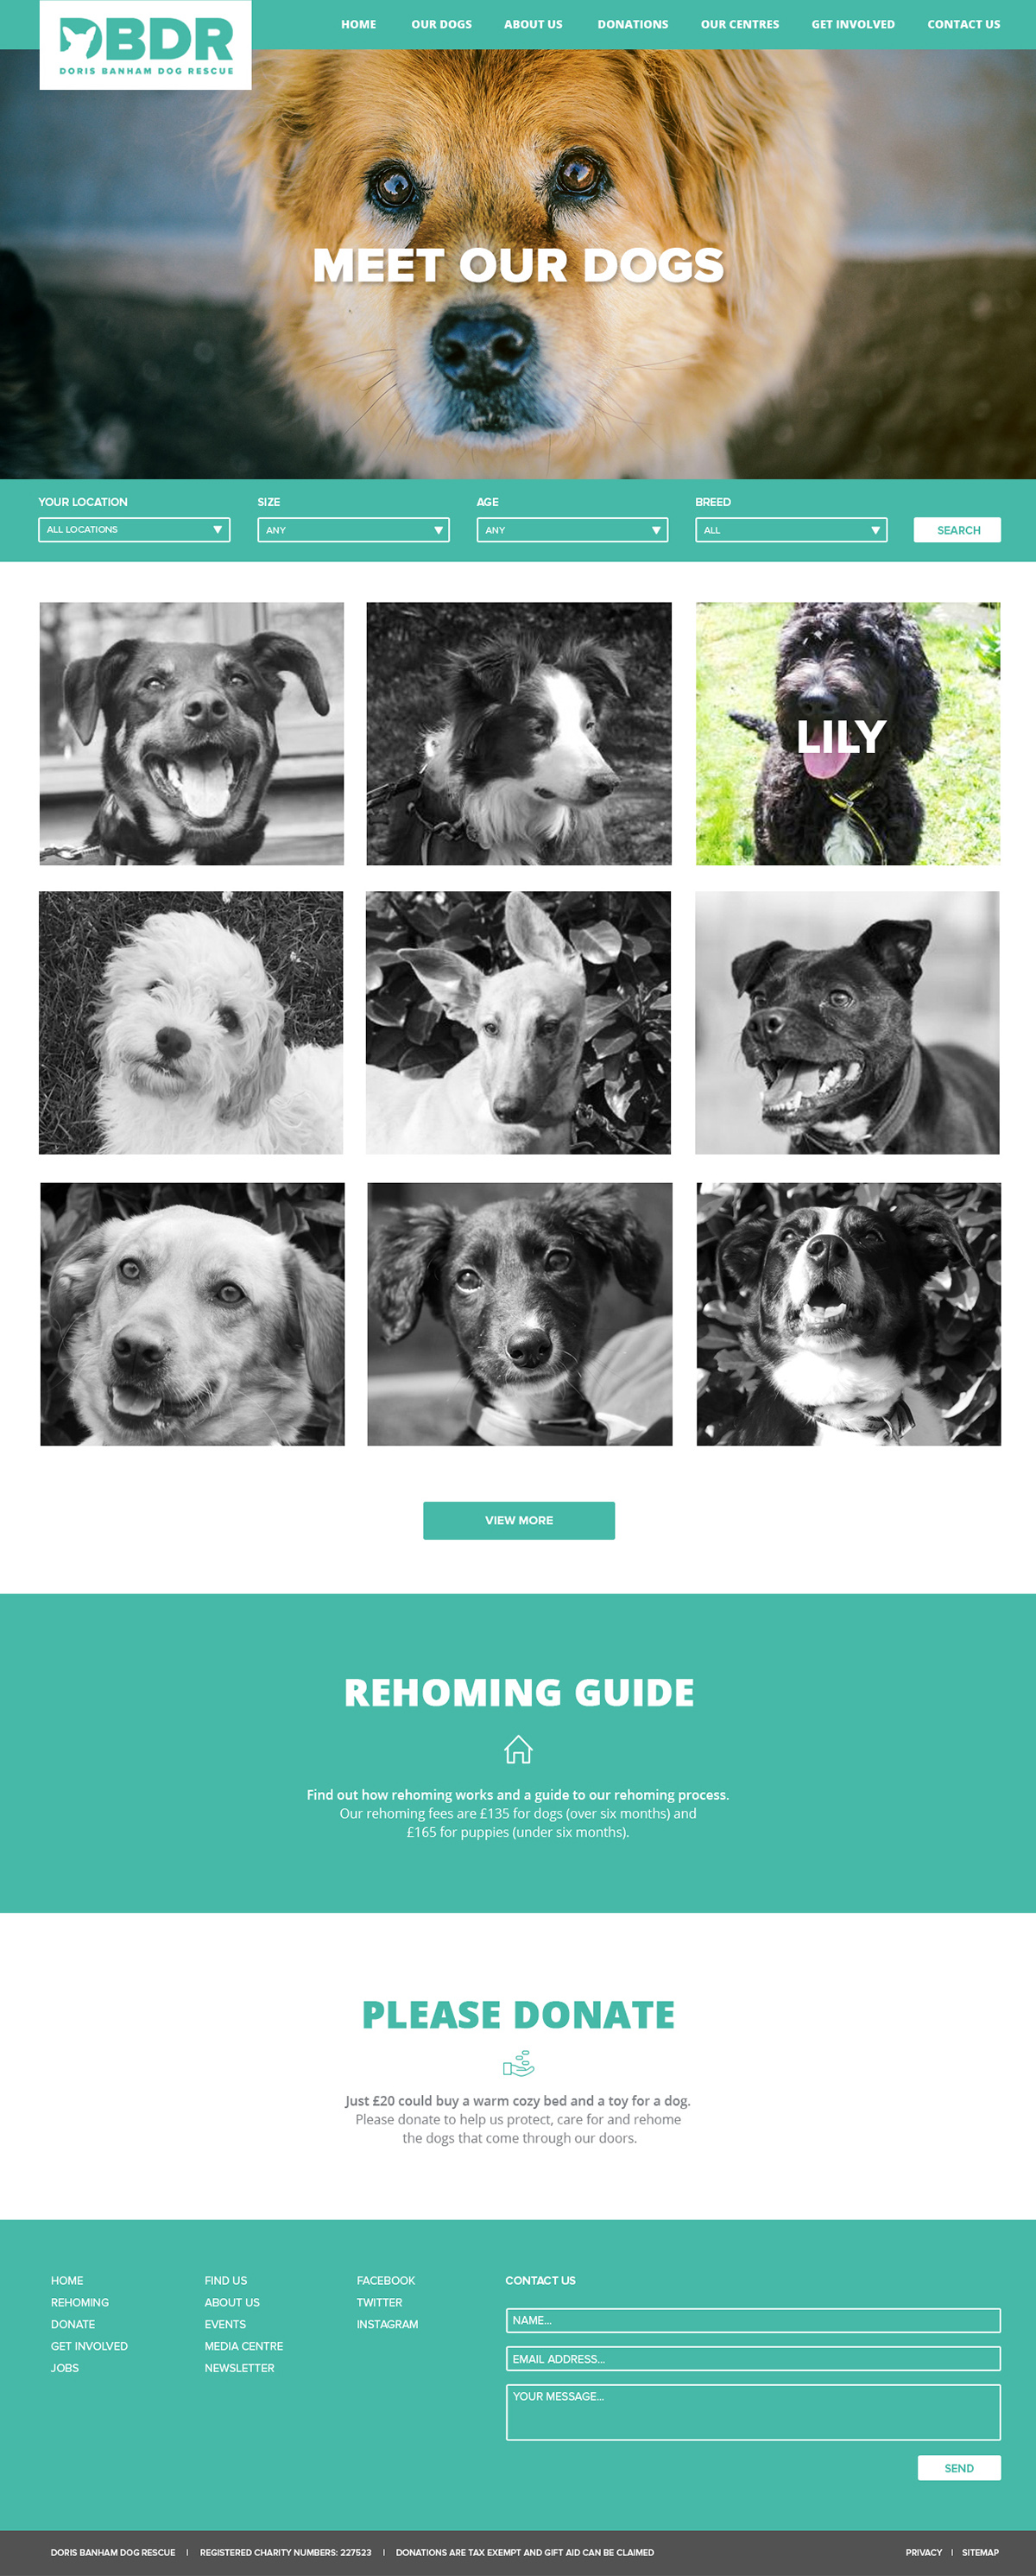 Adobe Portfolio charity dogs photos design creative new graphic Fun best friends donate promote